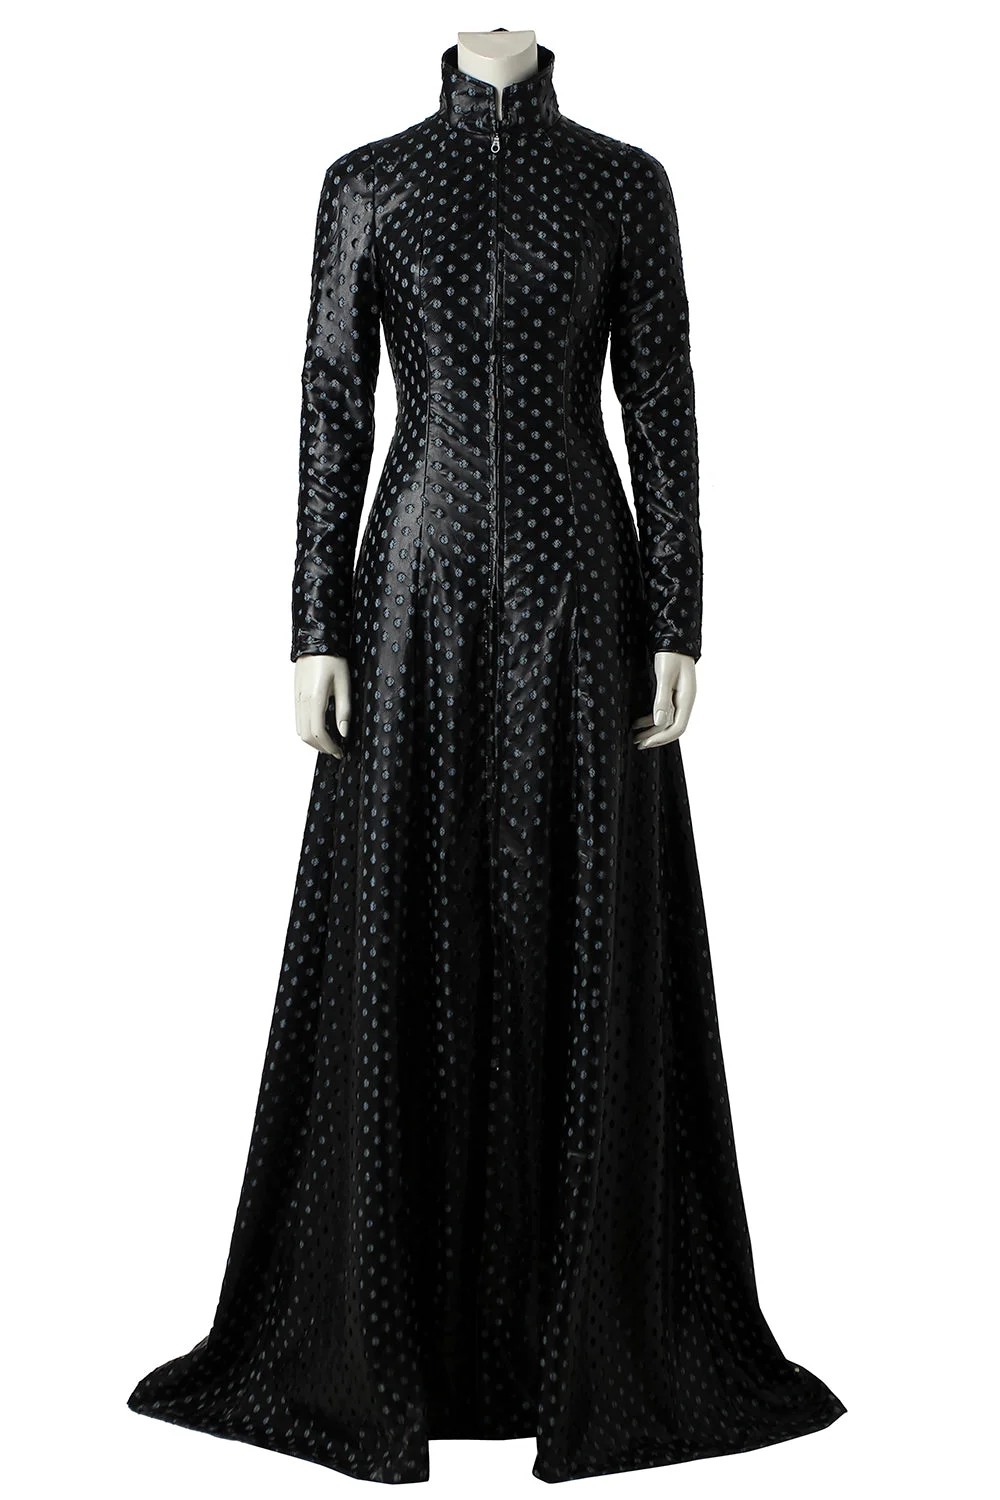 Game of Thrones Season 7 Cersei Lannister Black Dress Cosplay Costume